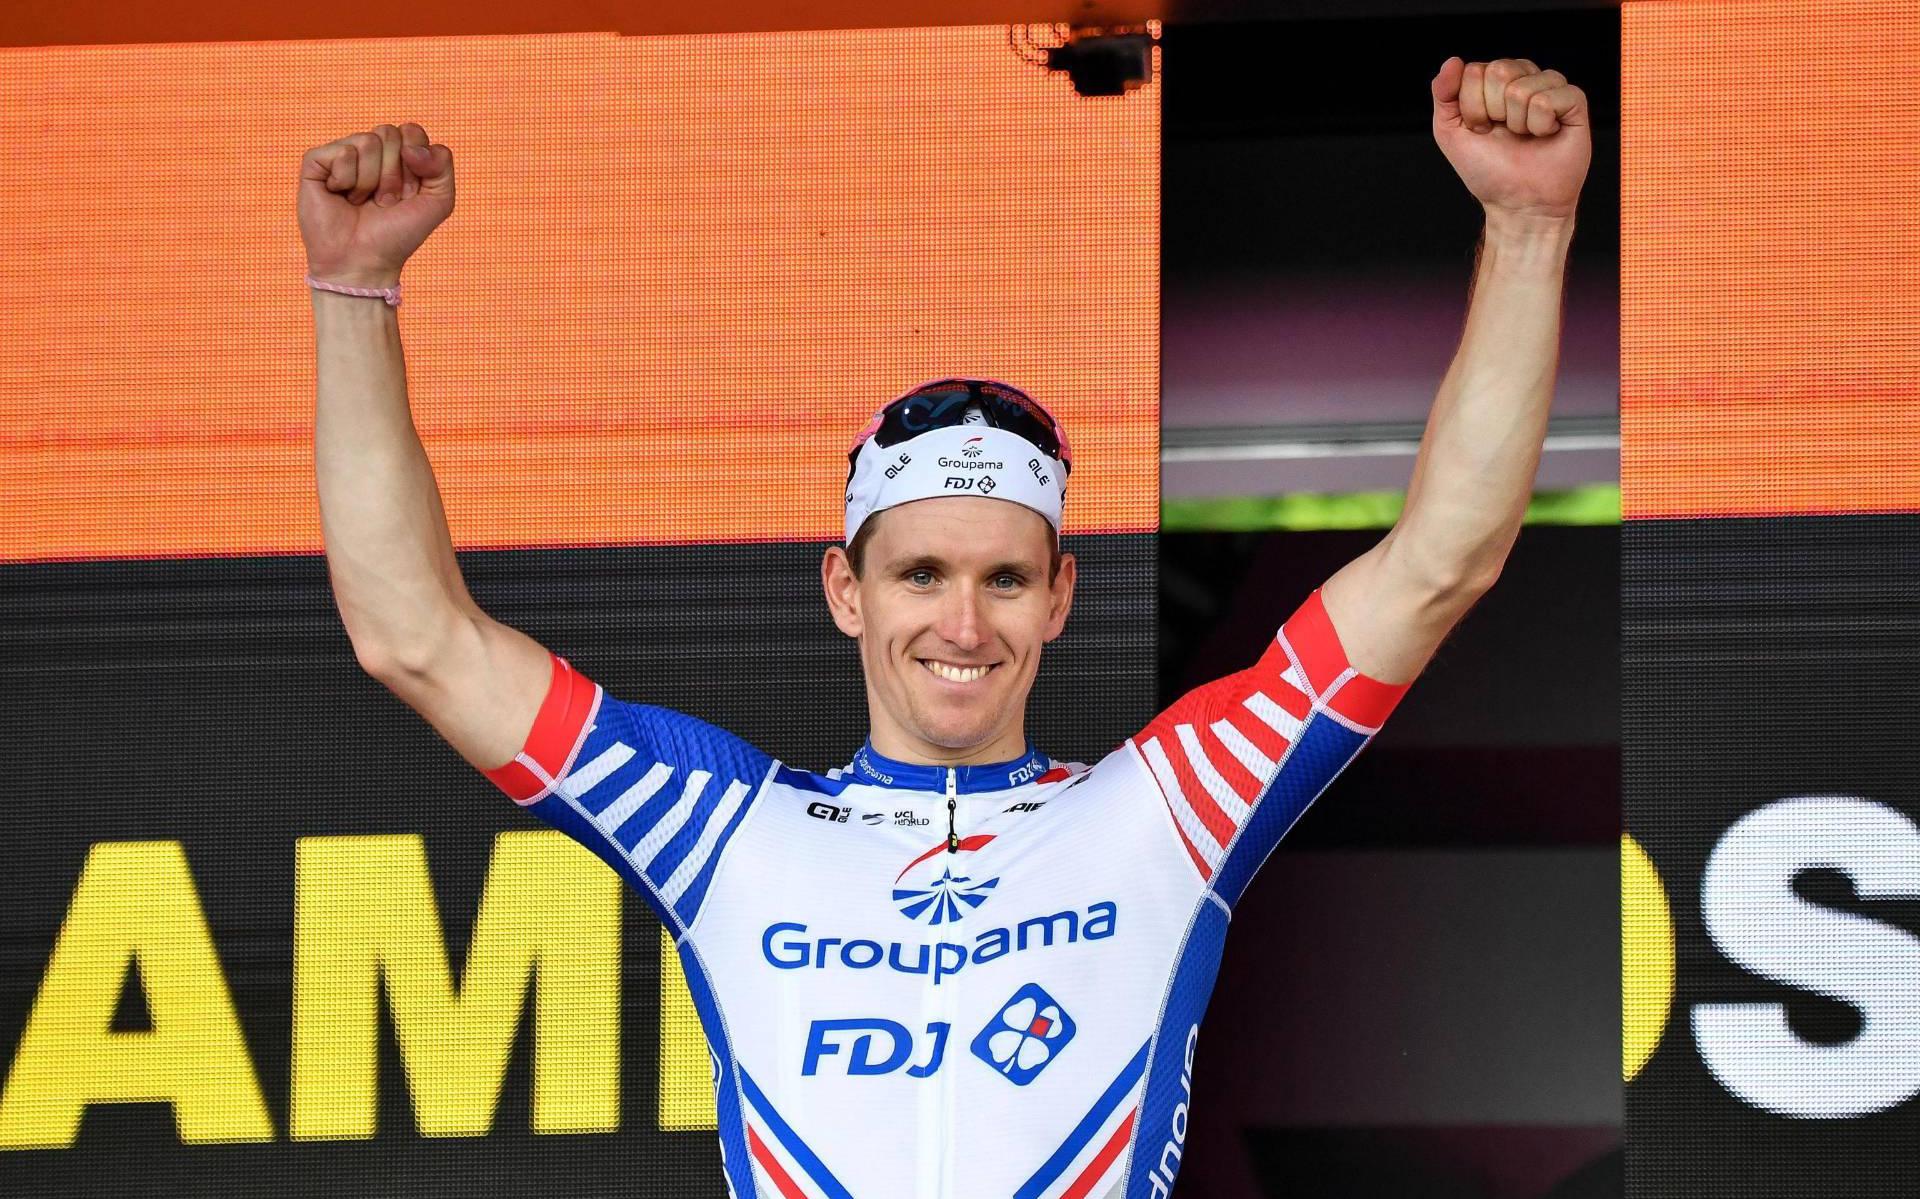 Franse wielrenner Démare sprint naar ritzege in Giro